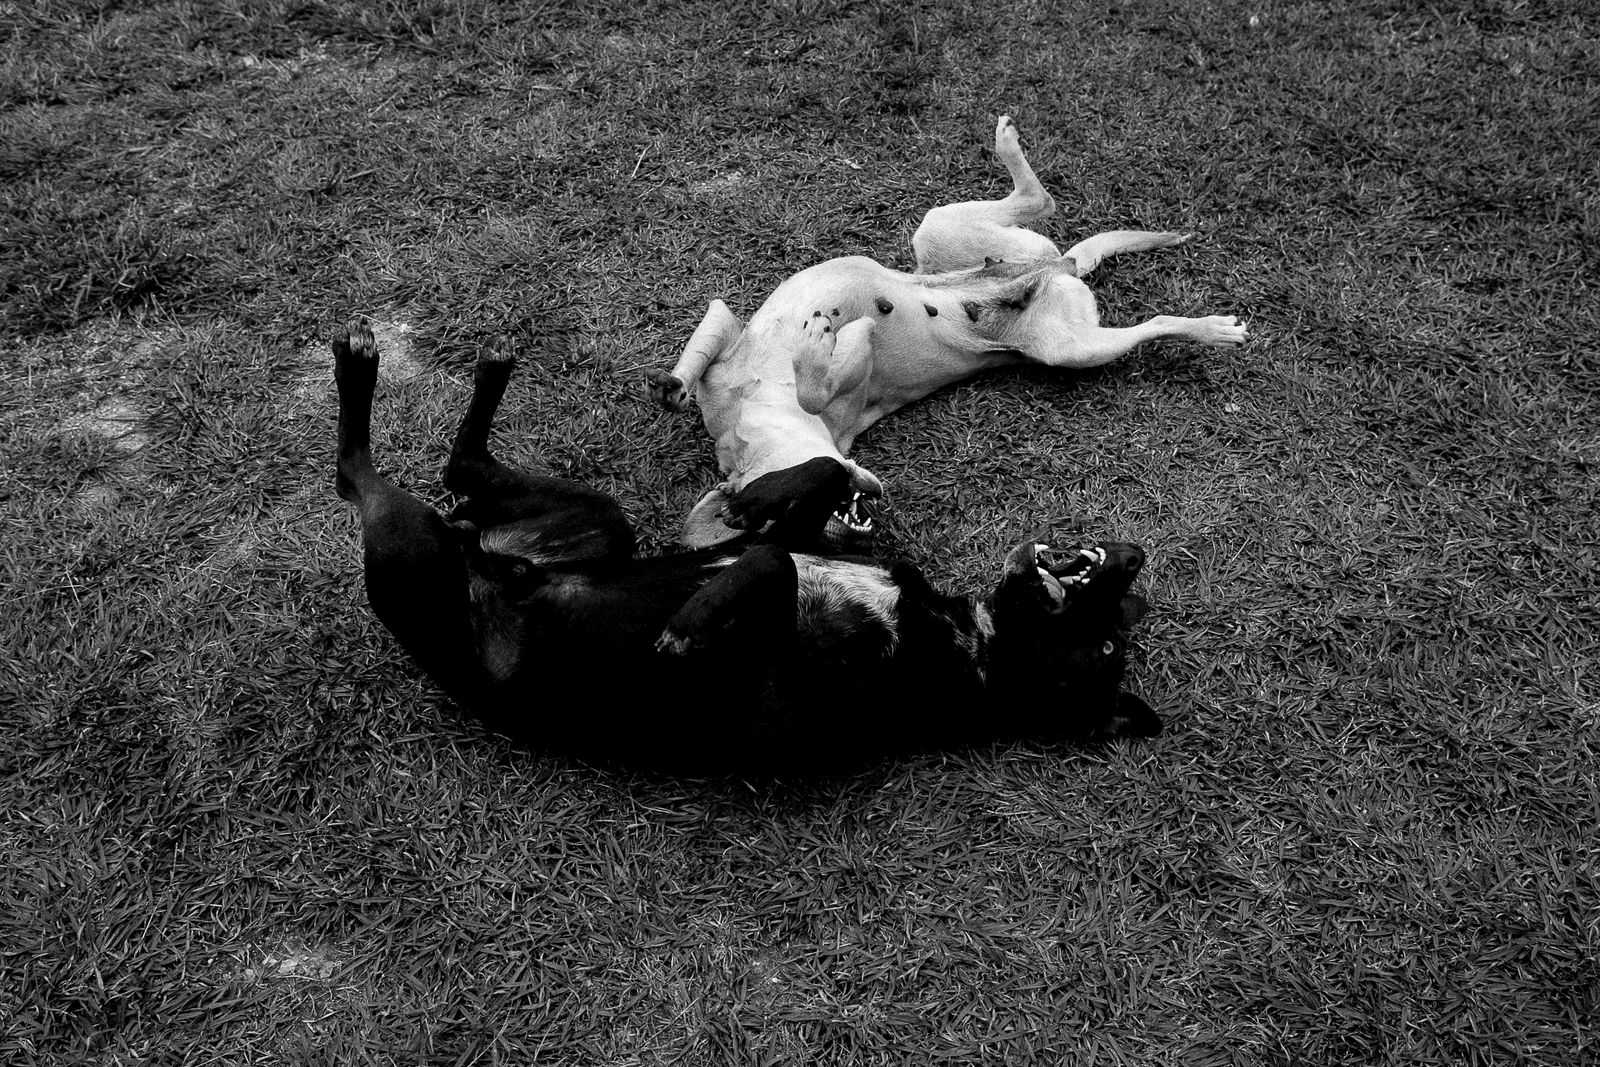 © Fabiola Ferrero - Two dogs play over the grass in San Cristóbal, Venezuela.